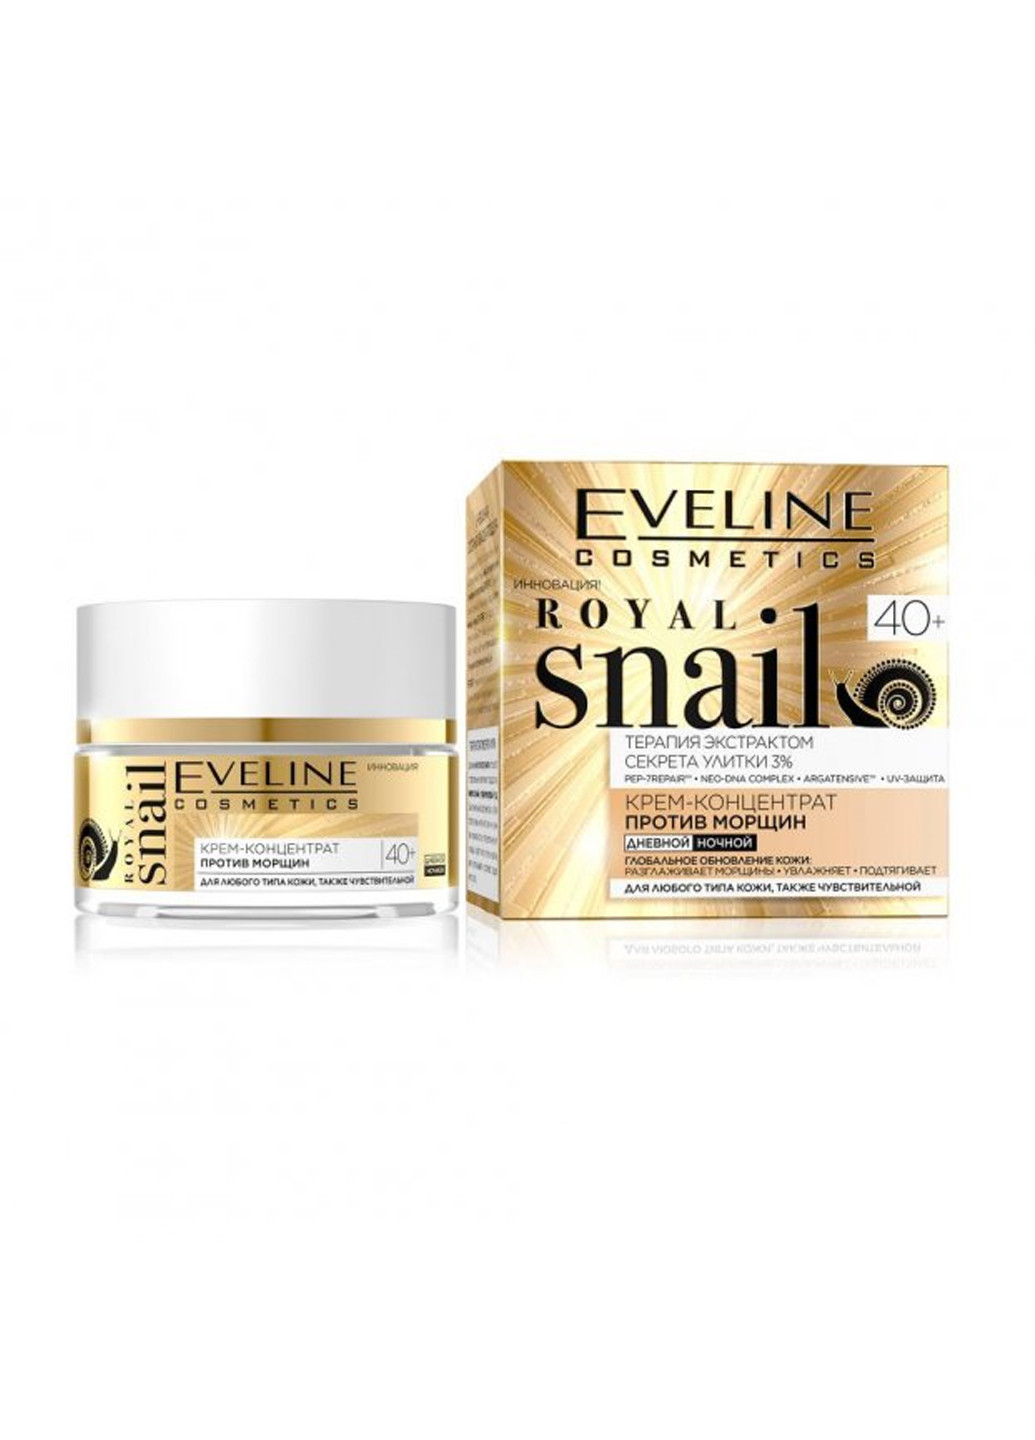 Крем-Концентрат против морщин eveline royal snail 40+, 50 мл Eveline Cosmetics 5901761980967 (256234149)